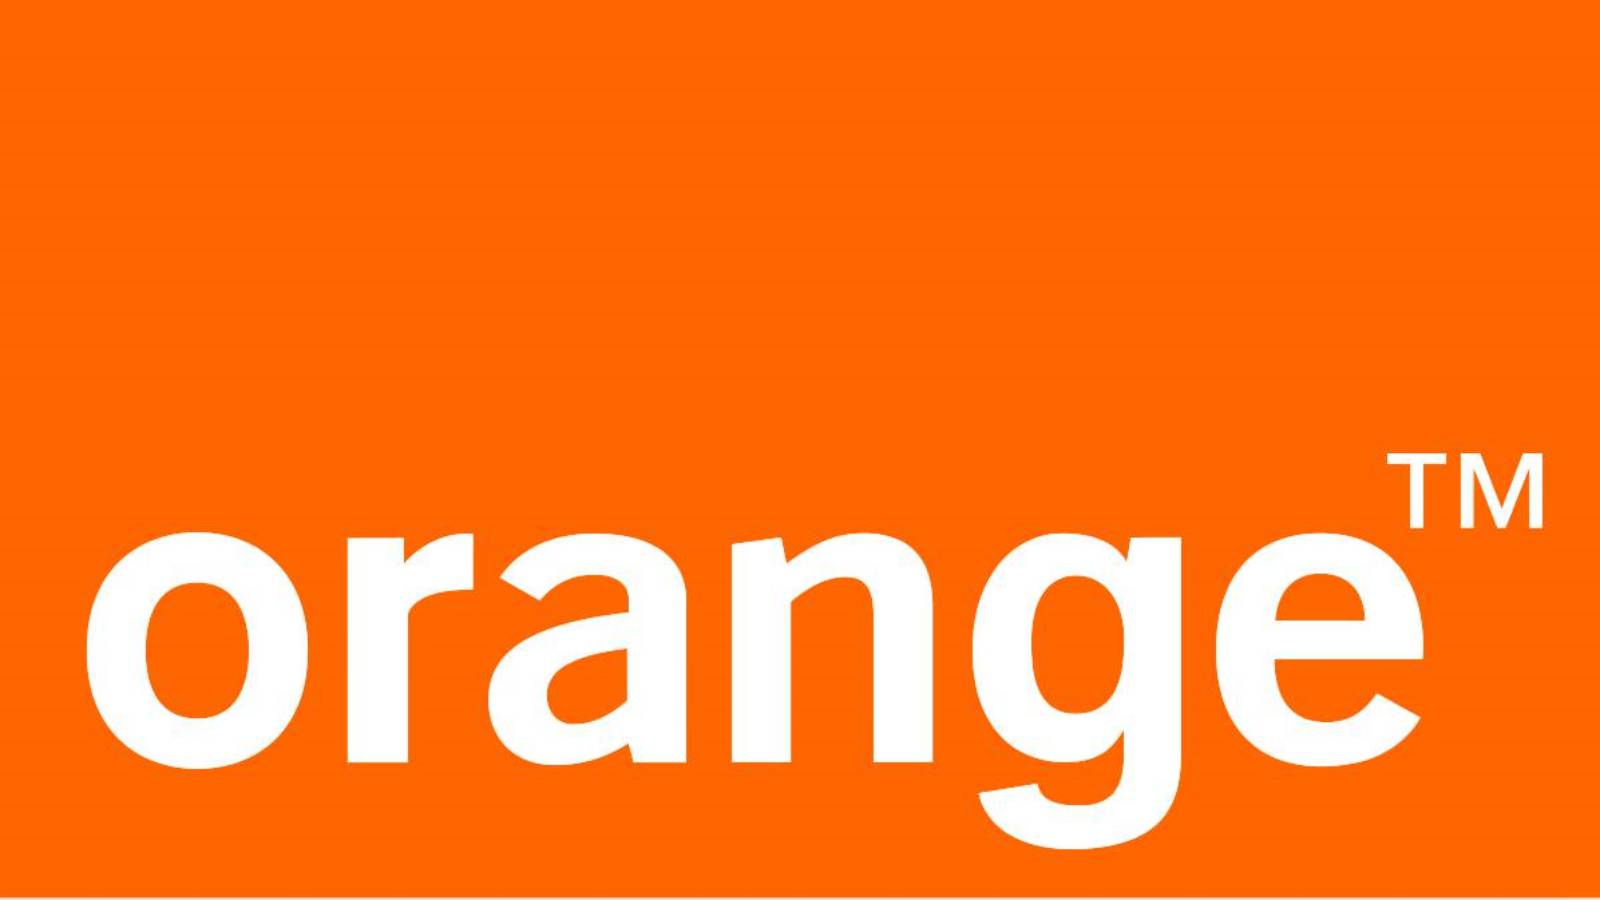 Orange Notificarea Importanta GRATIS Clienti Multi NU Stiau